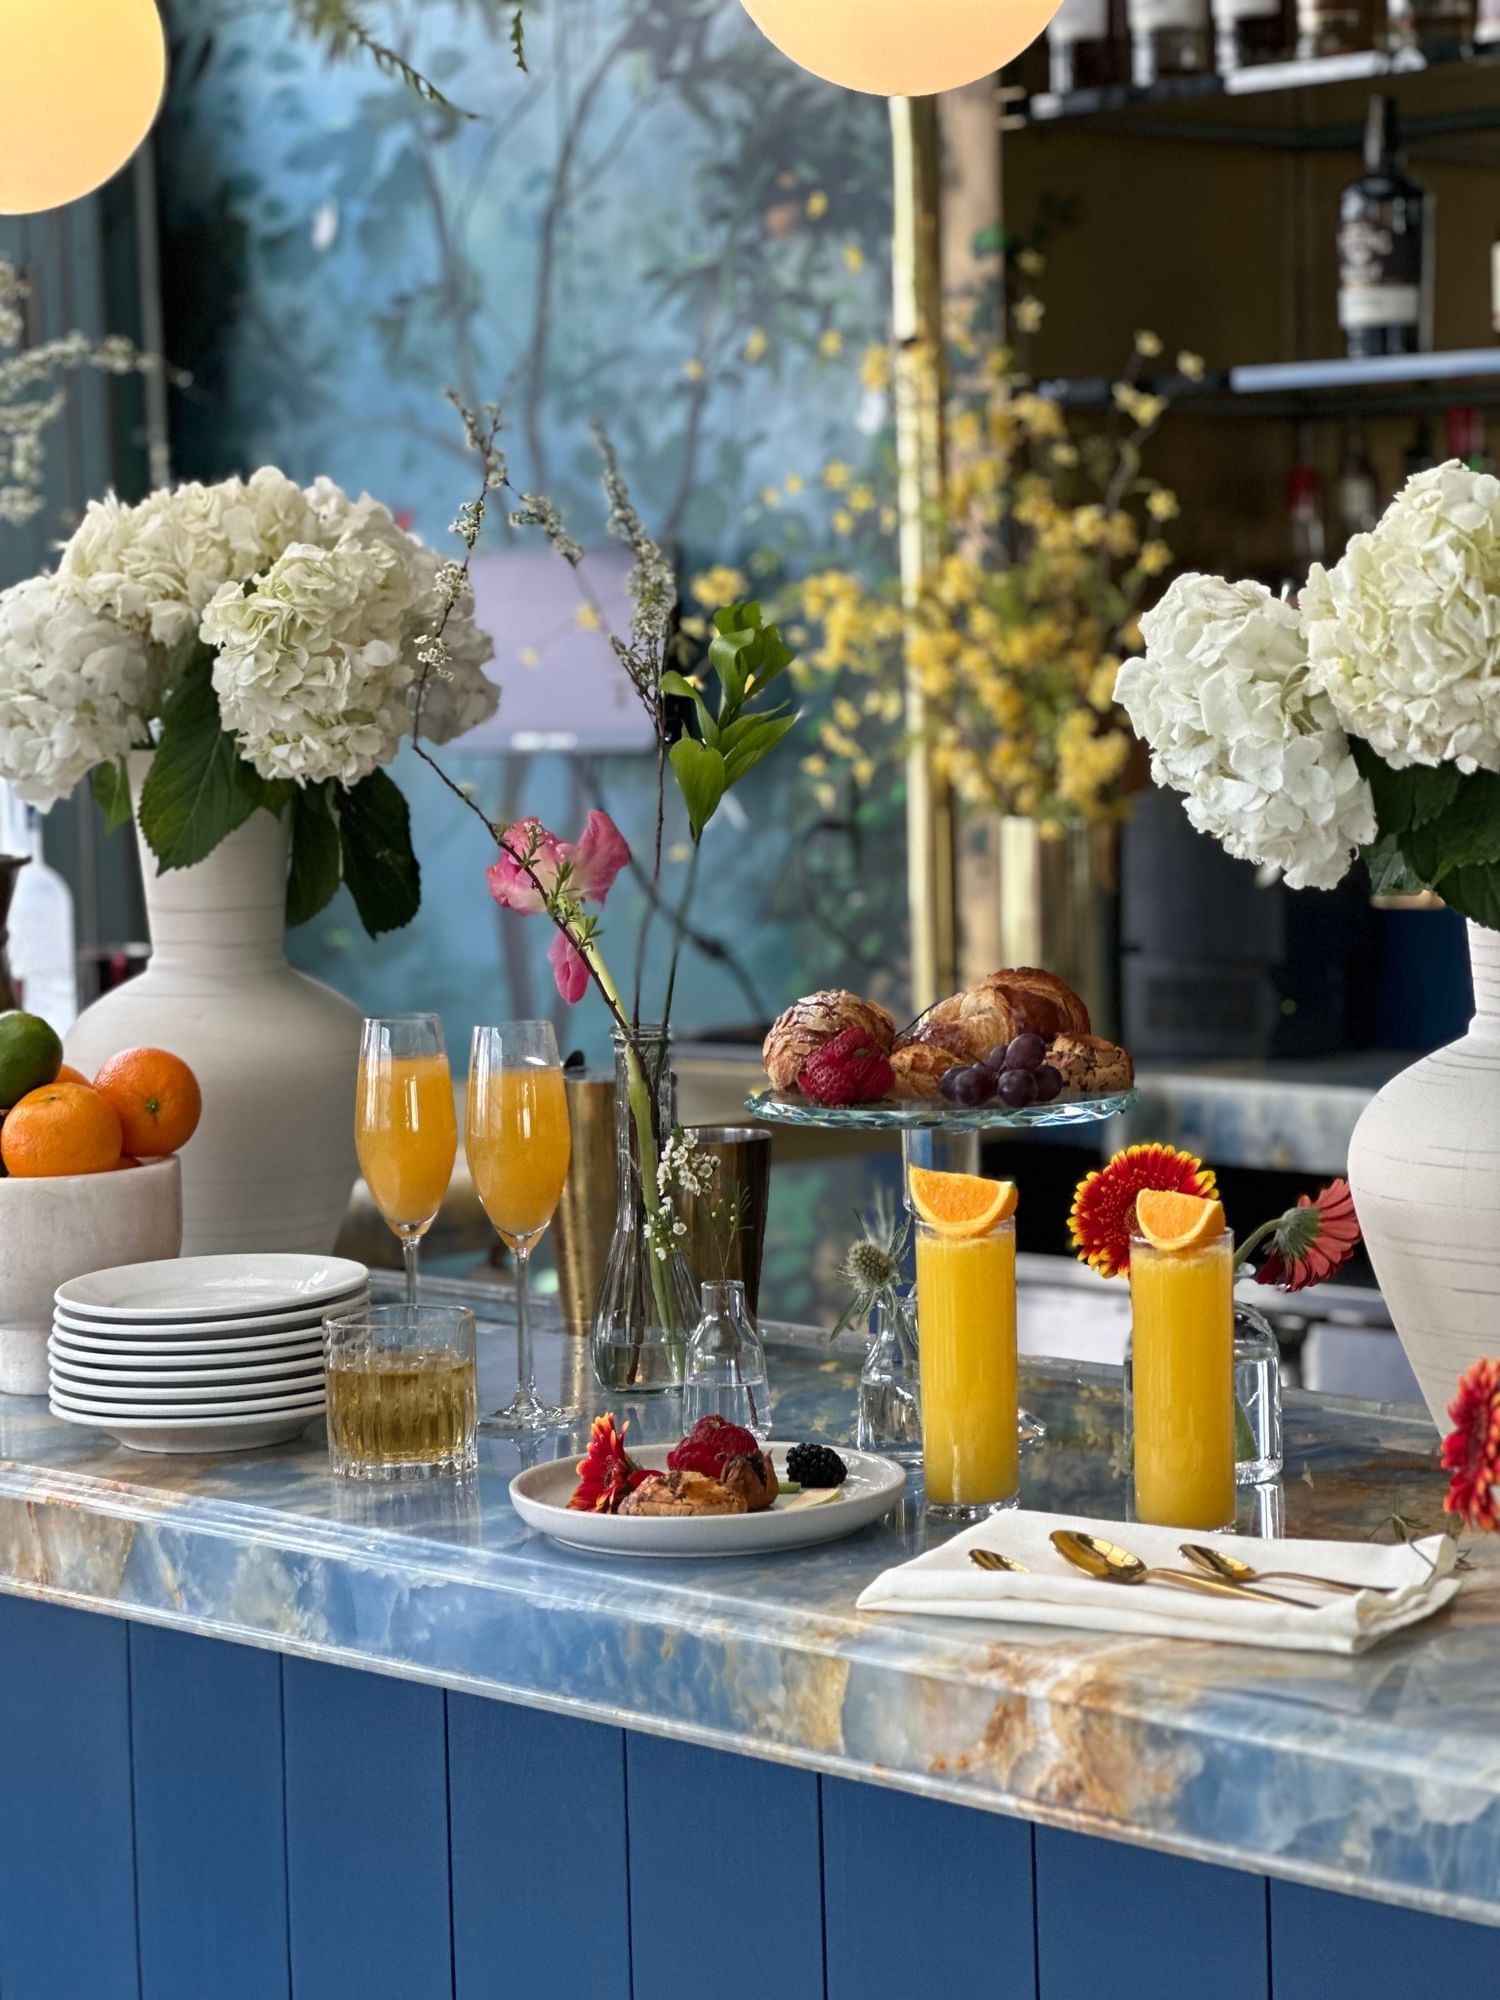 An arrangement of orange juice, pastries and florals